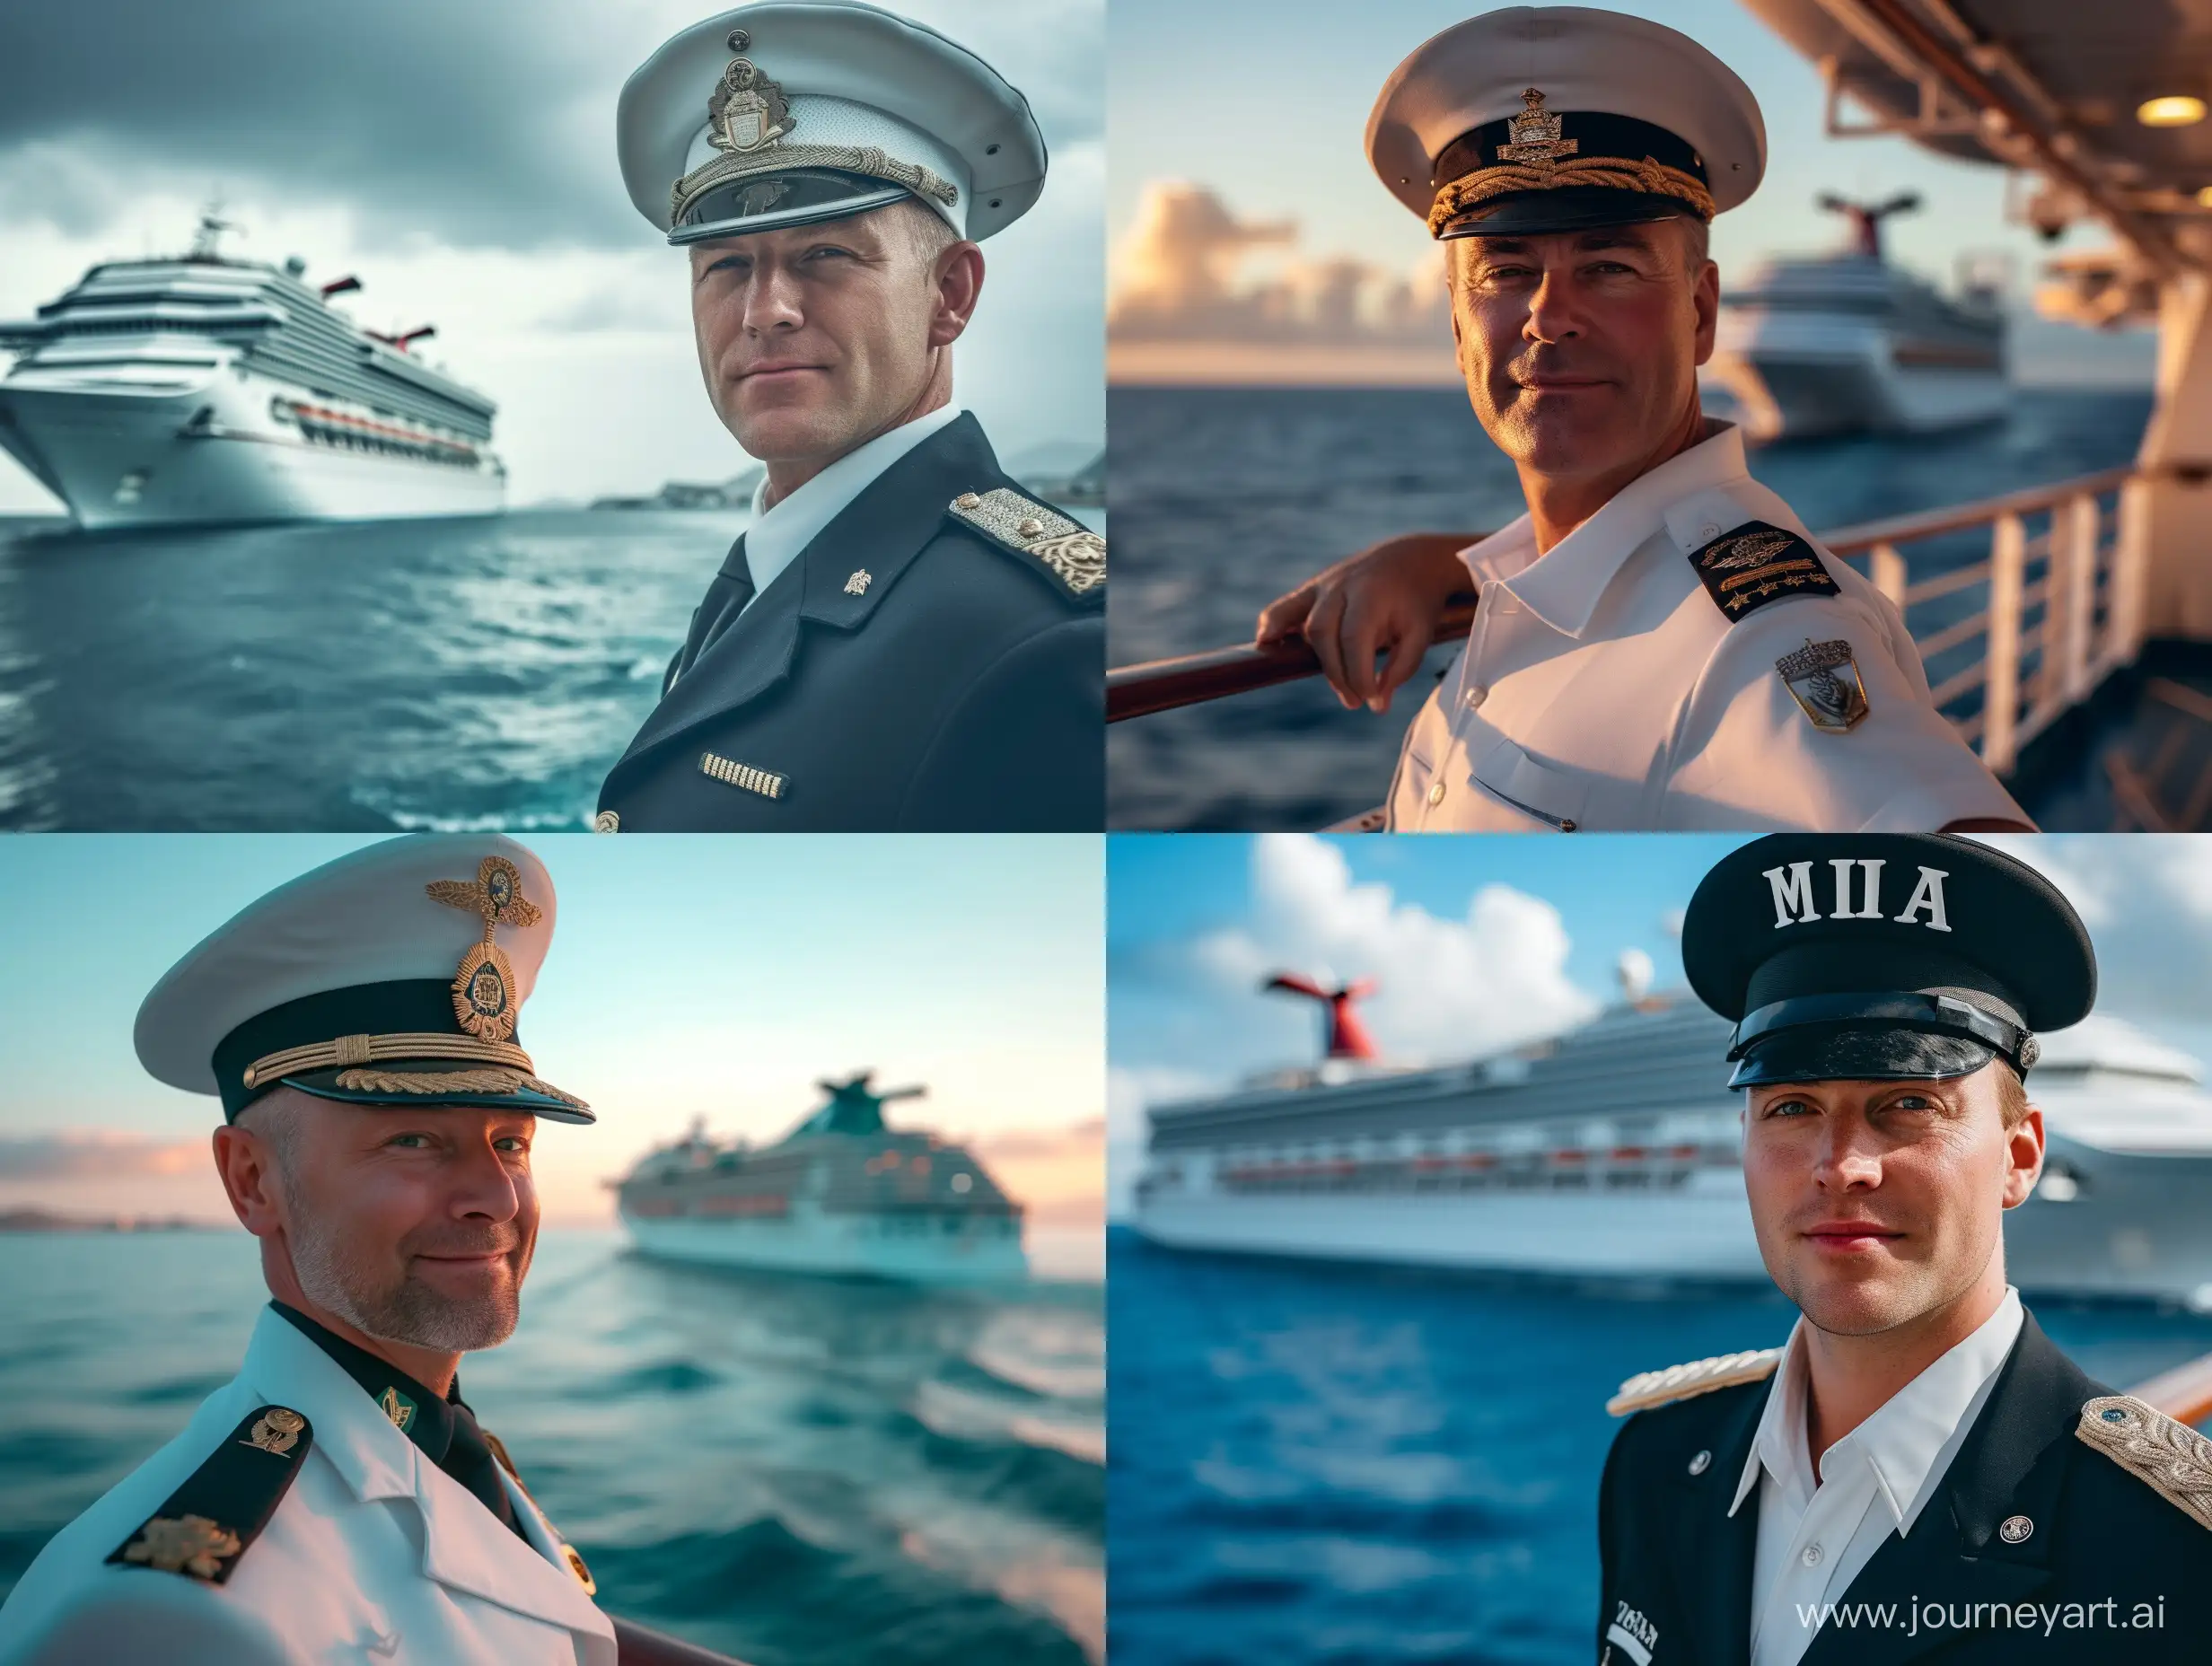 Captain-Navigating-Luxurious-Cruise-Liner-at-Sea